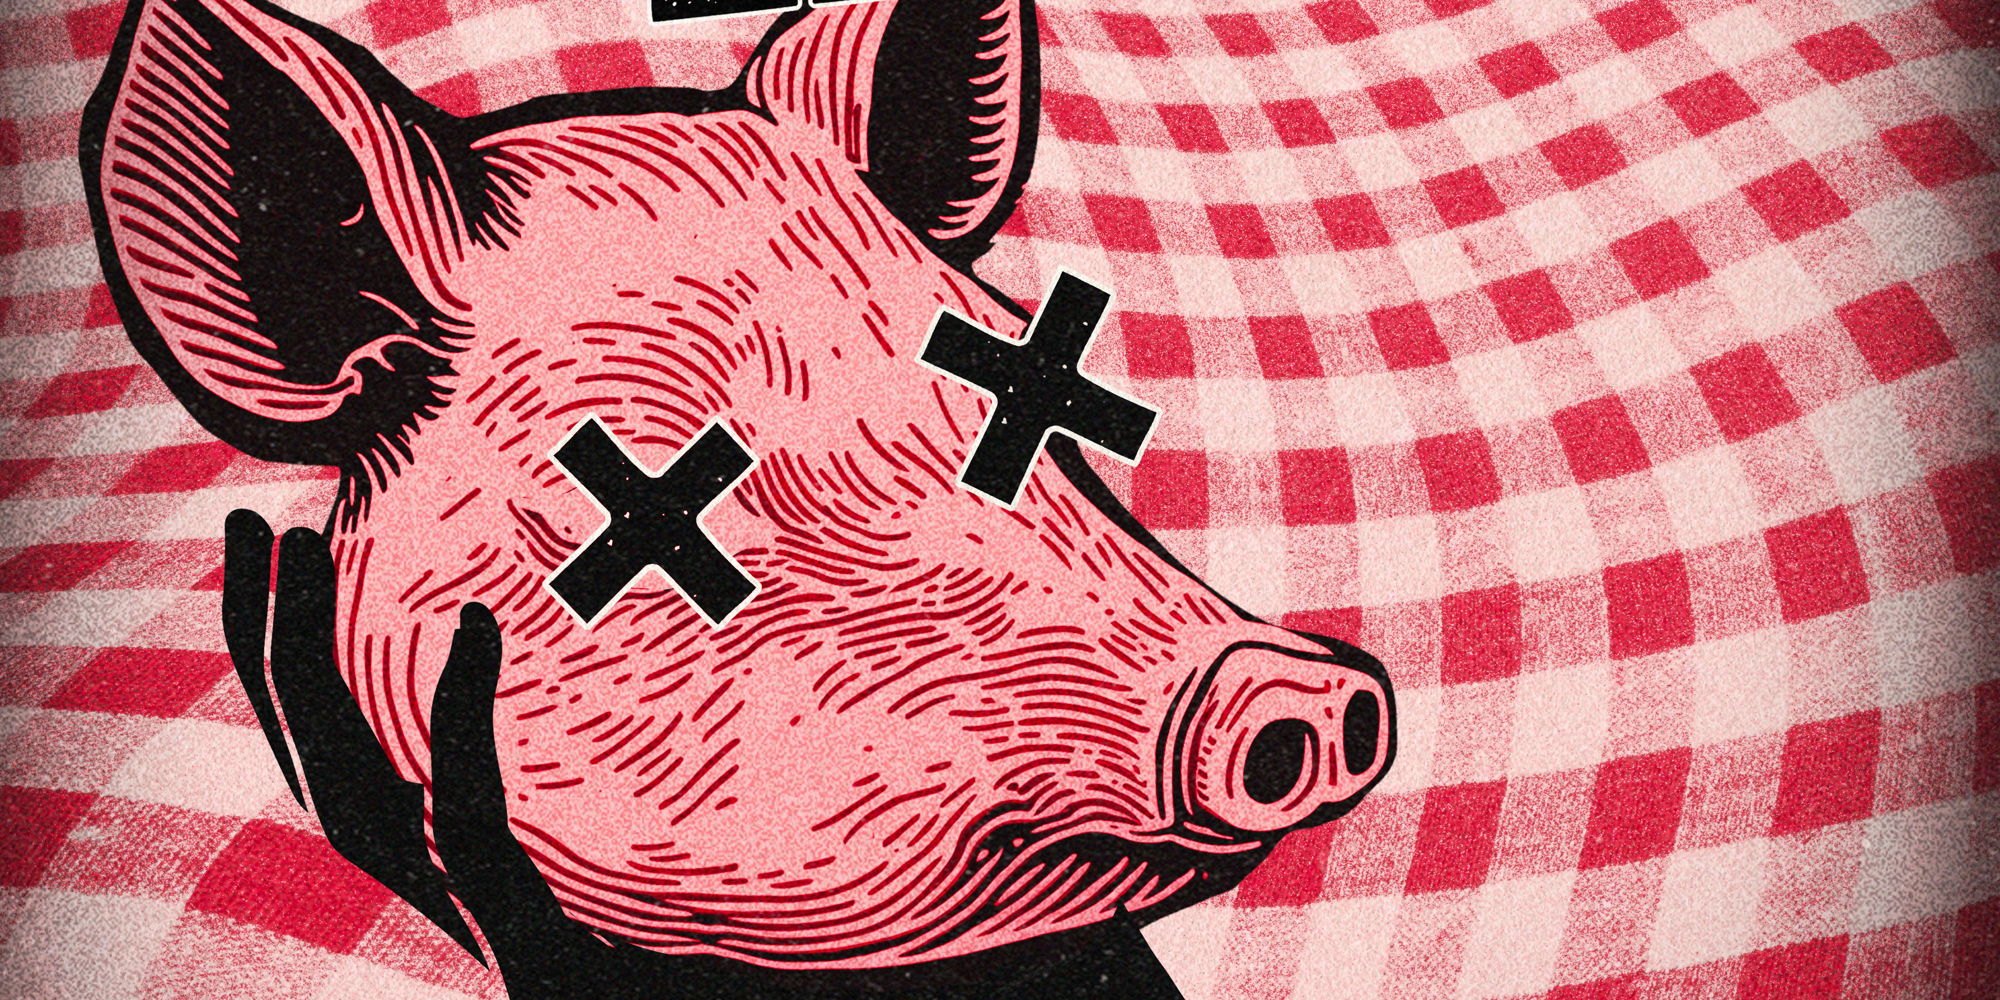 Fat Ham promotional image